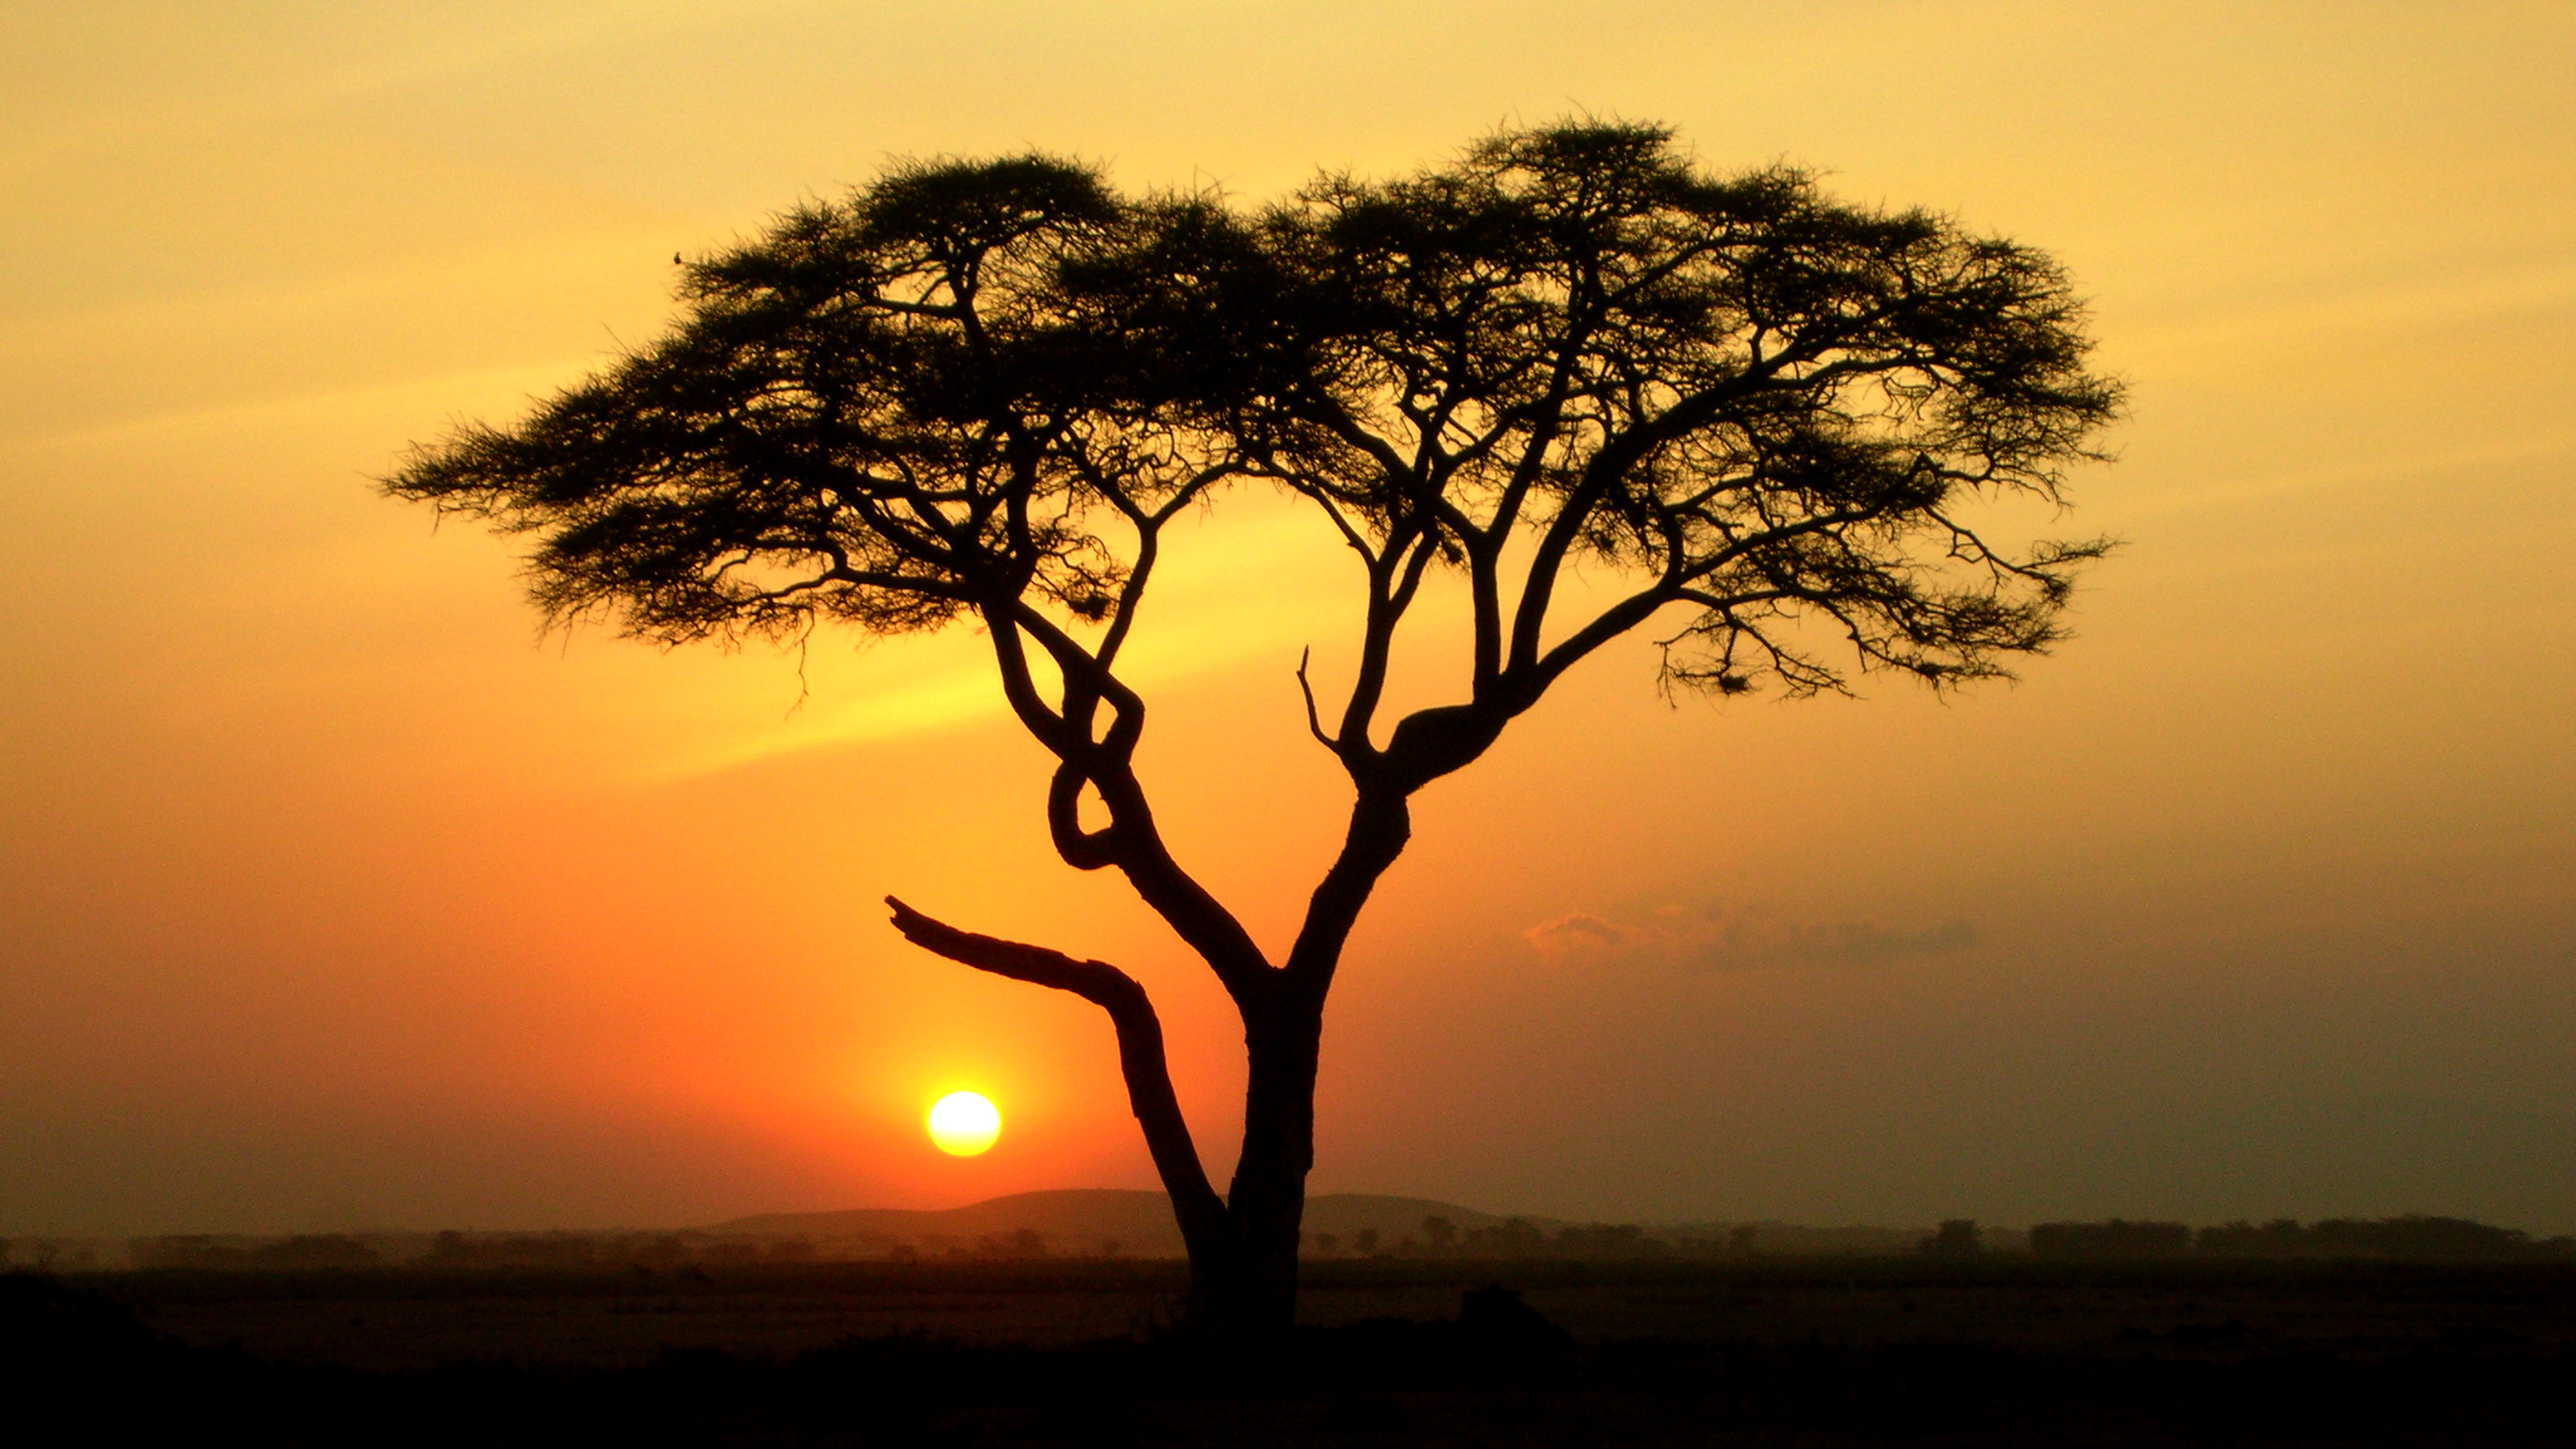 Fever Trees at Sunset, Africa скачать